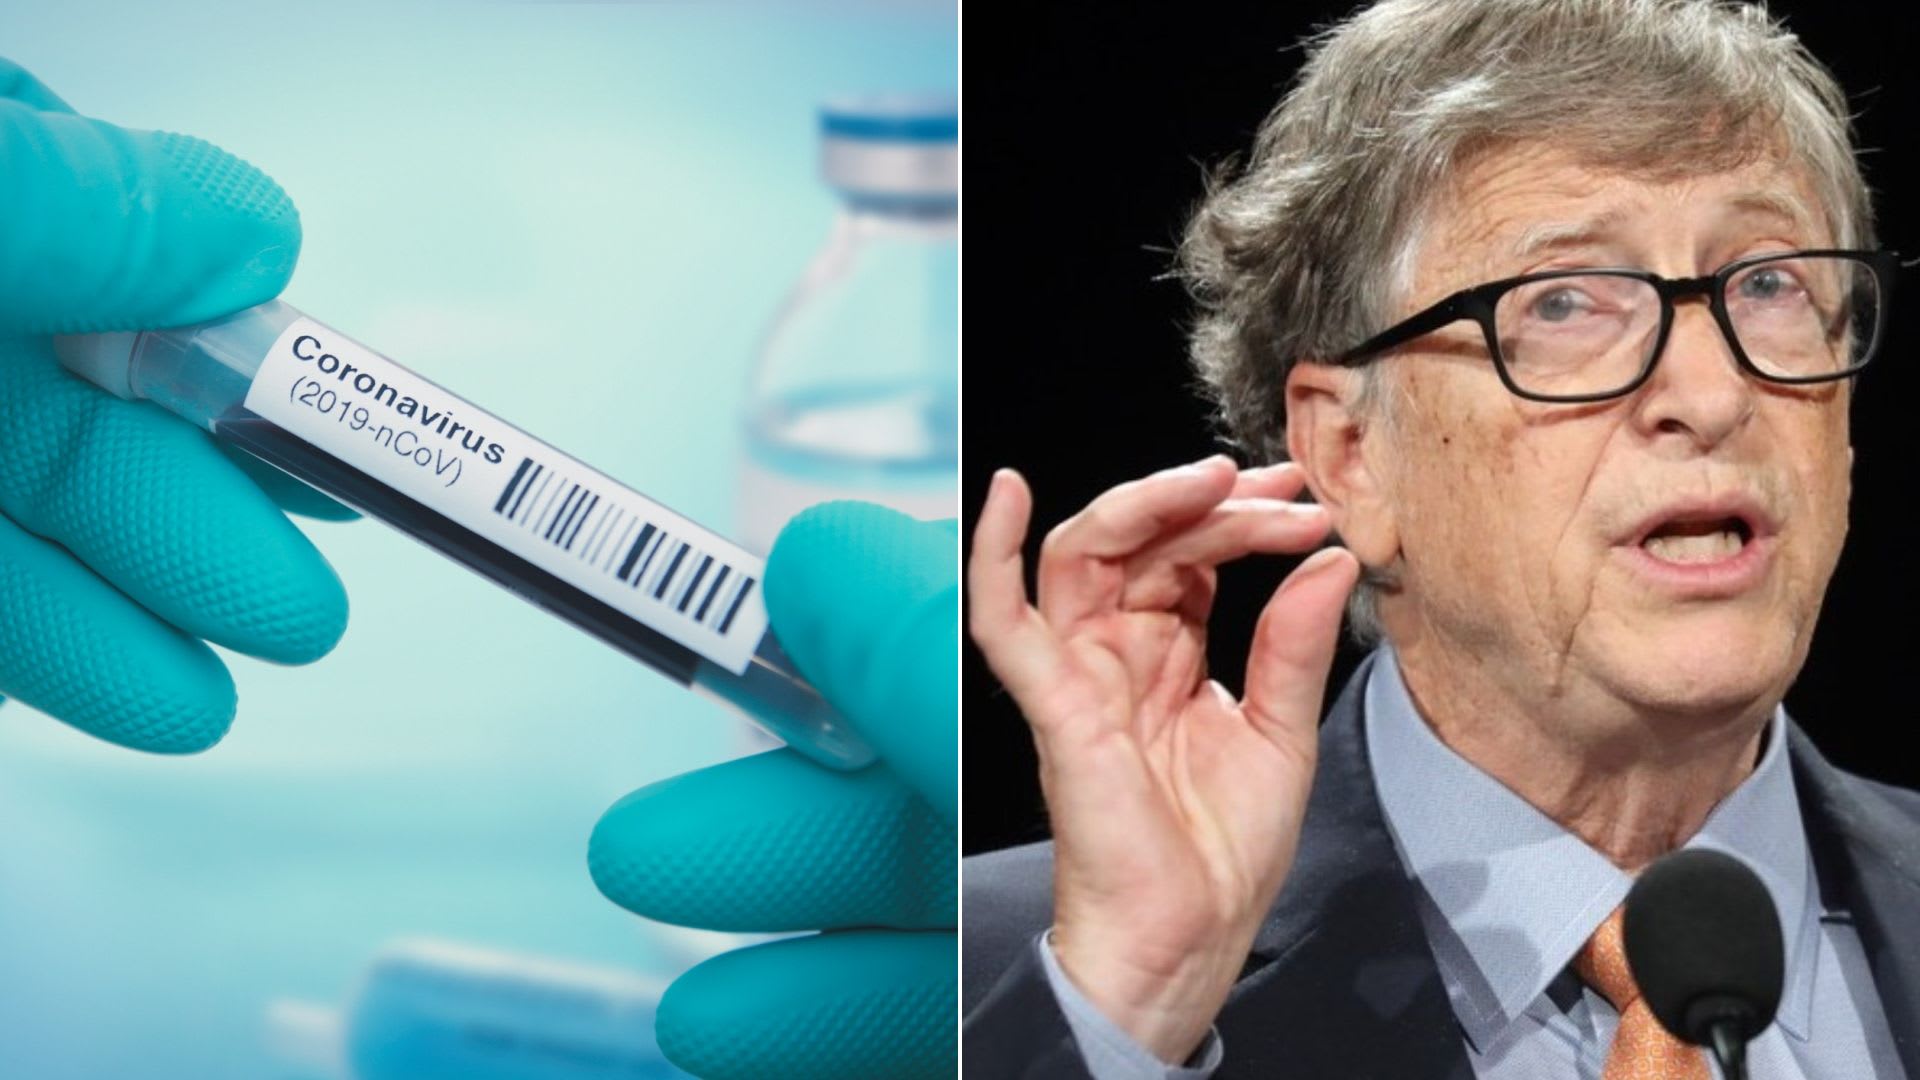 Koronavirus a Bill Gates